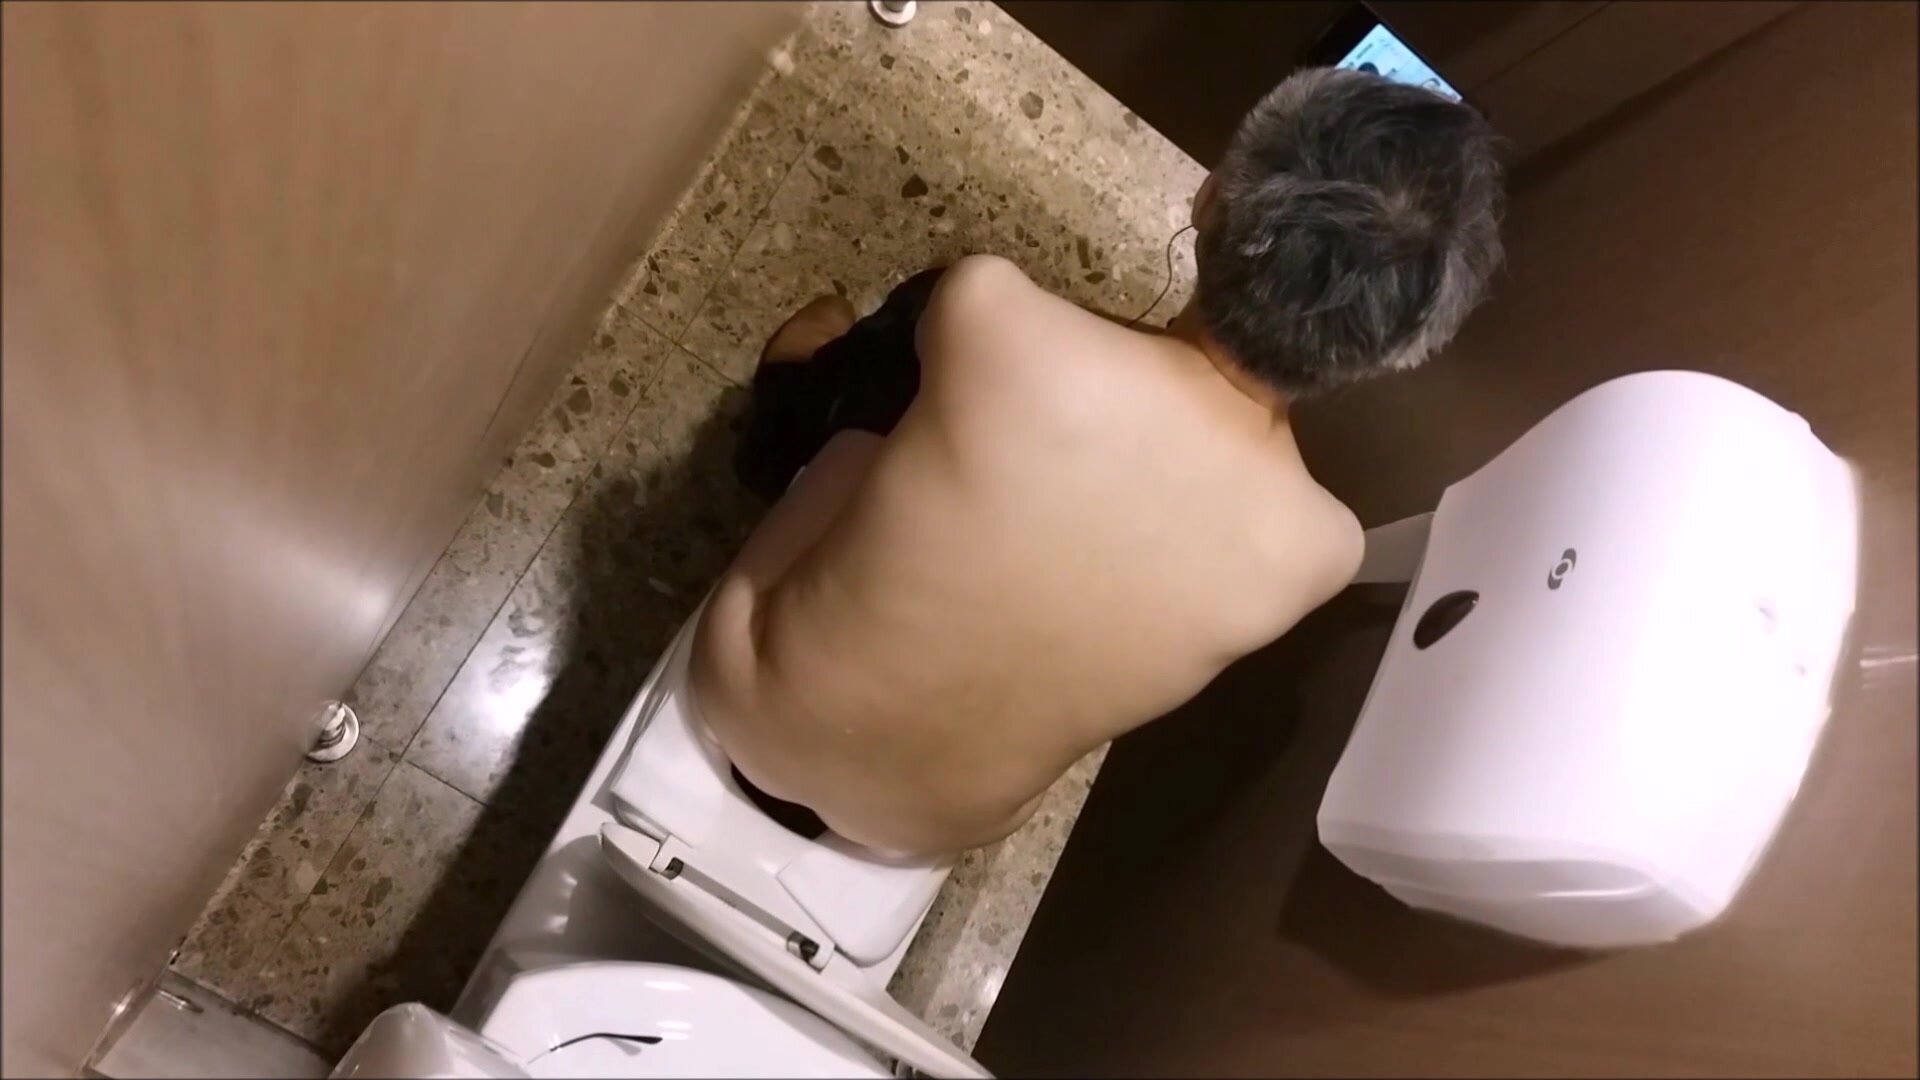 Naked Toilet Voyeur - Toilet spy naked - ThisVid.com